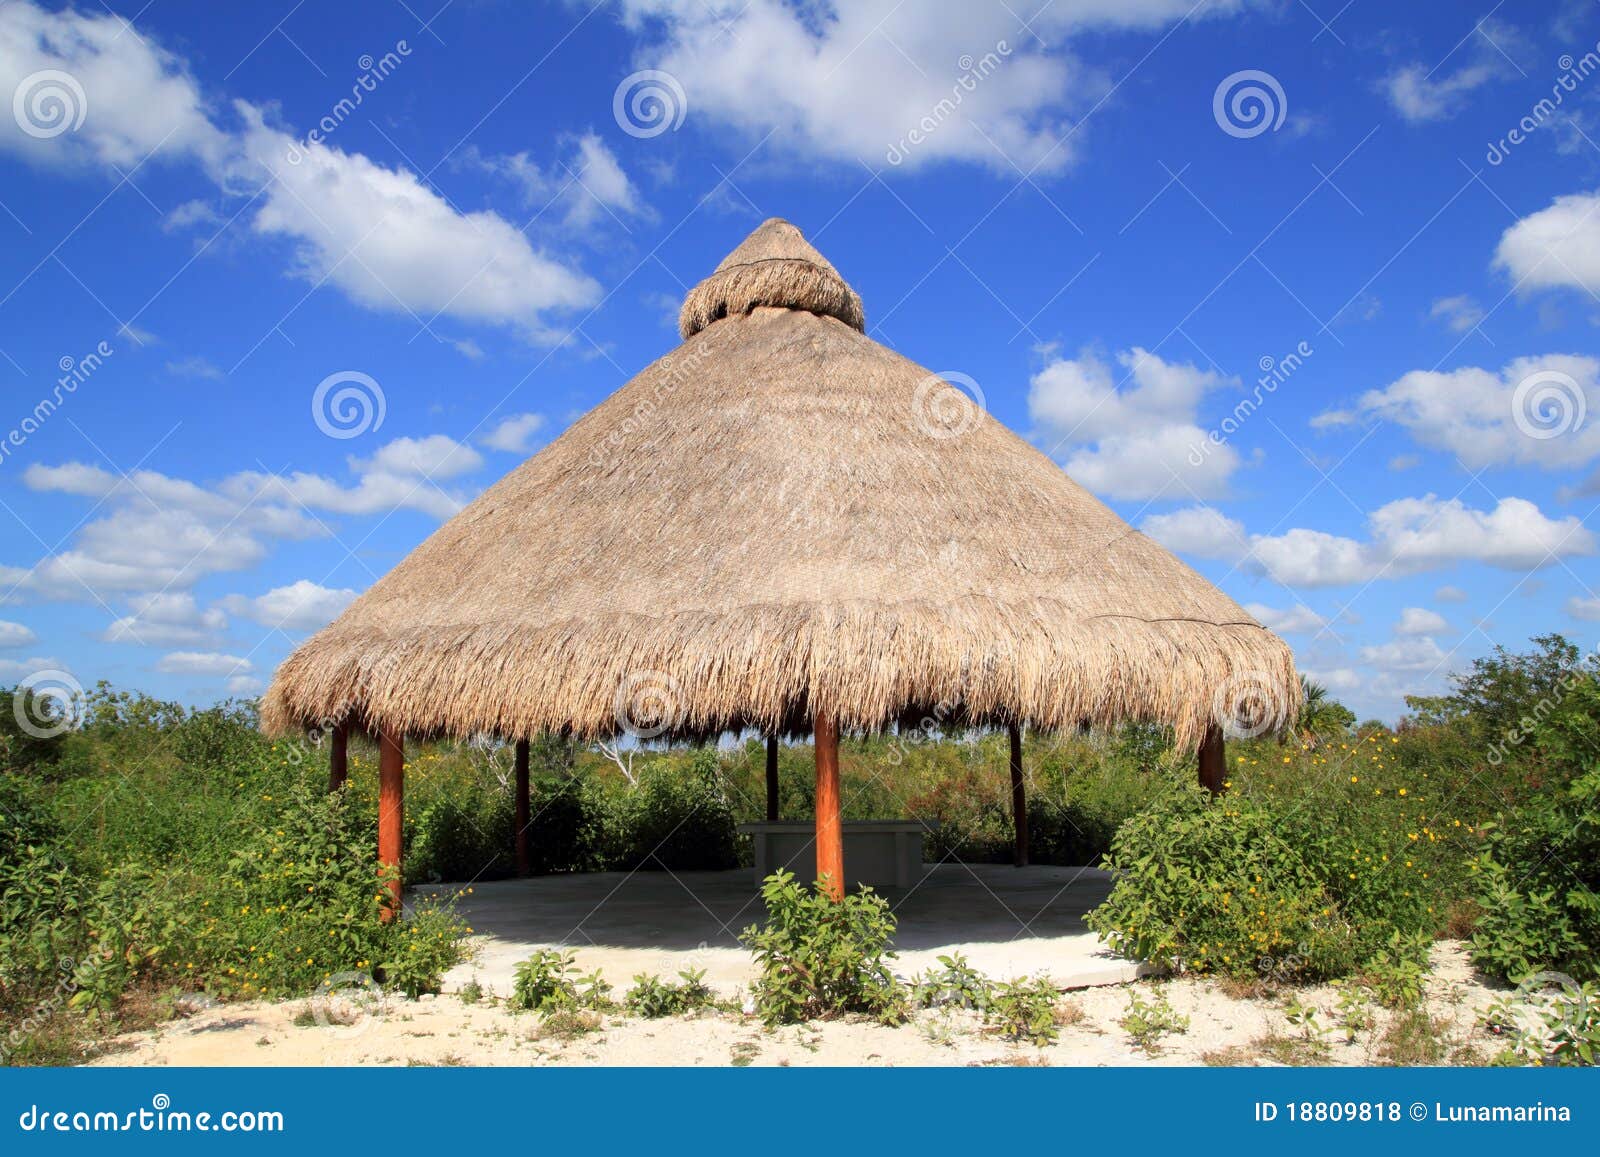 big palapa hut sunroof in mexico jungle